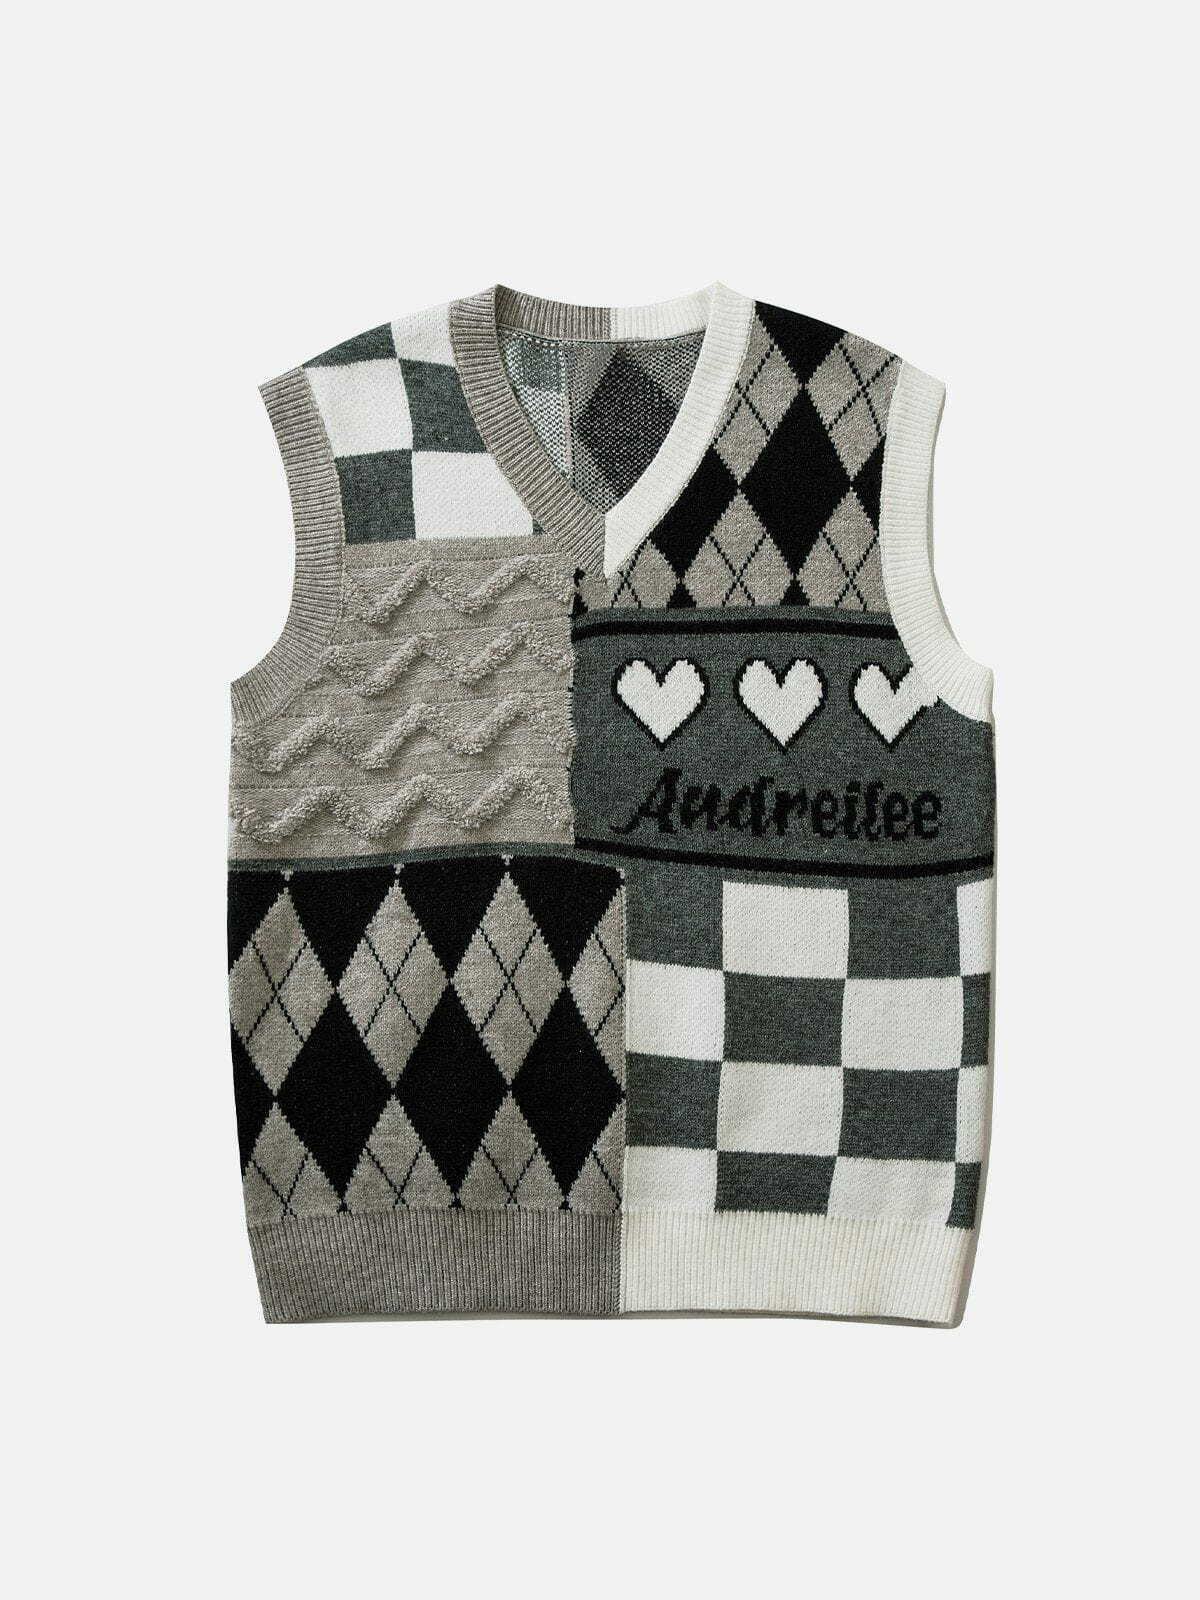 revolutionary layering sweater vest edgy  retro streetwear essential 1371